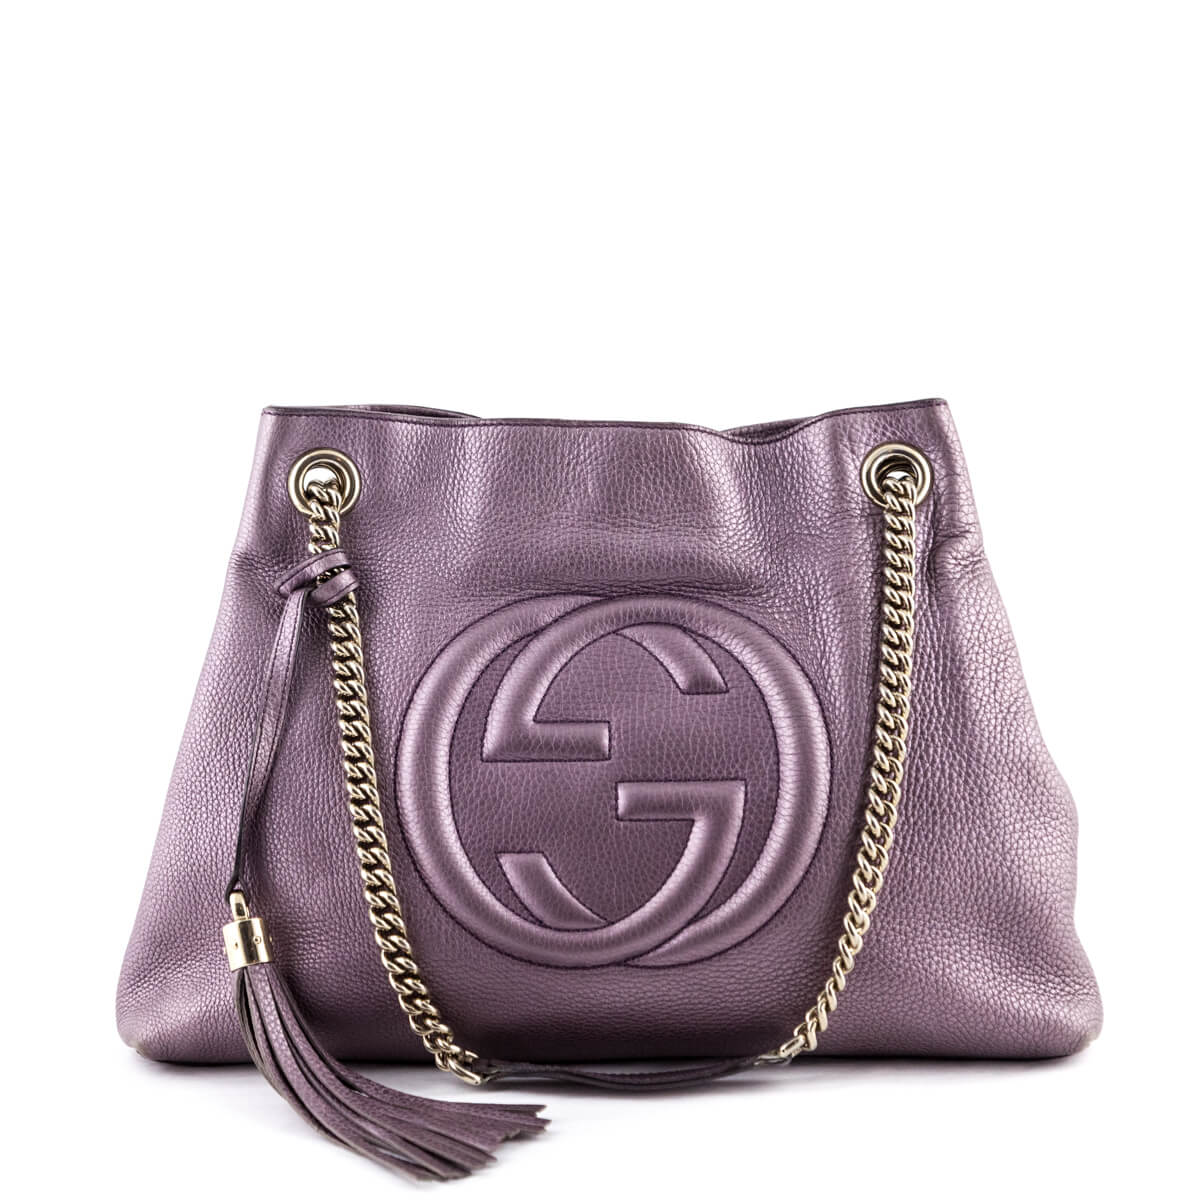 Gucci Metallic Purple Soho Chain Shoulder Bag - Preowned Gucci Handbag